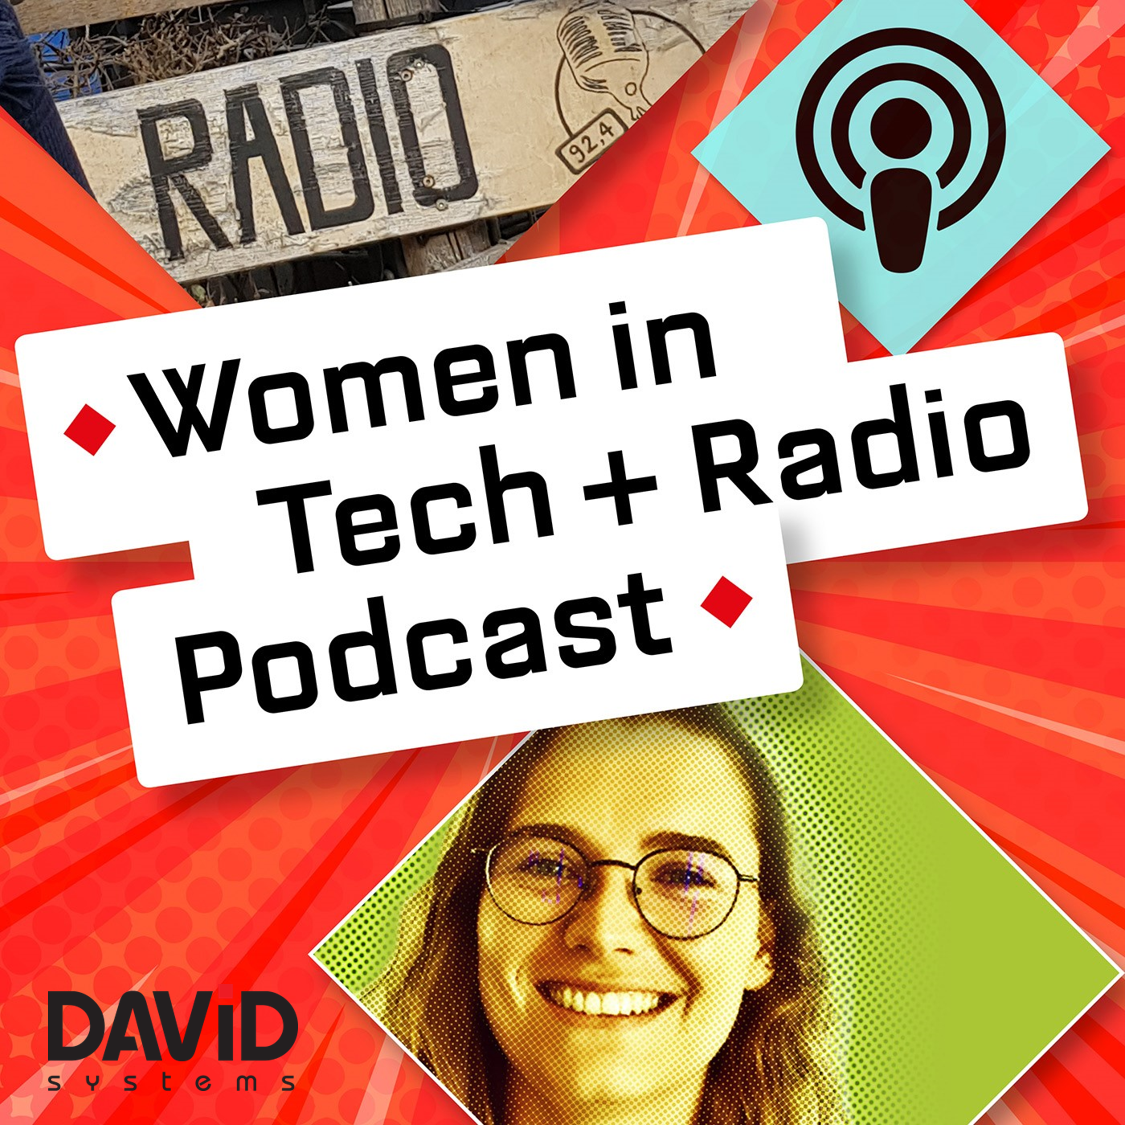 DAVID's Women in Tech + Radio podcast